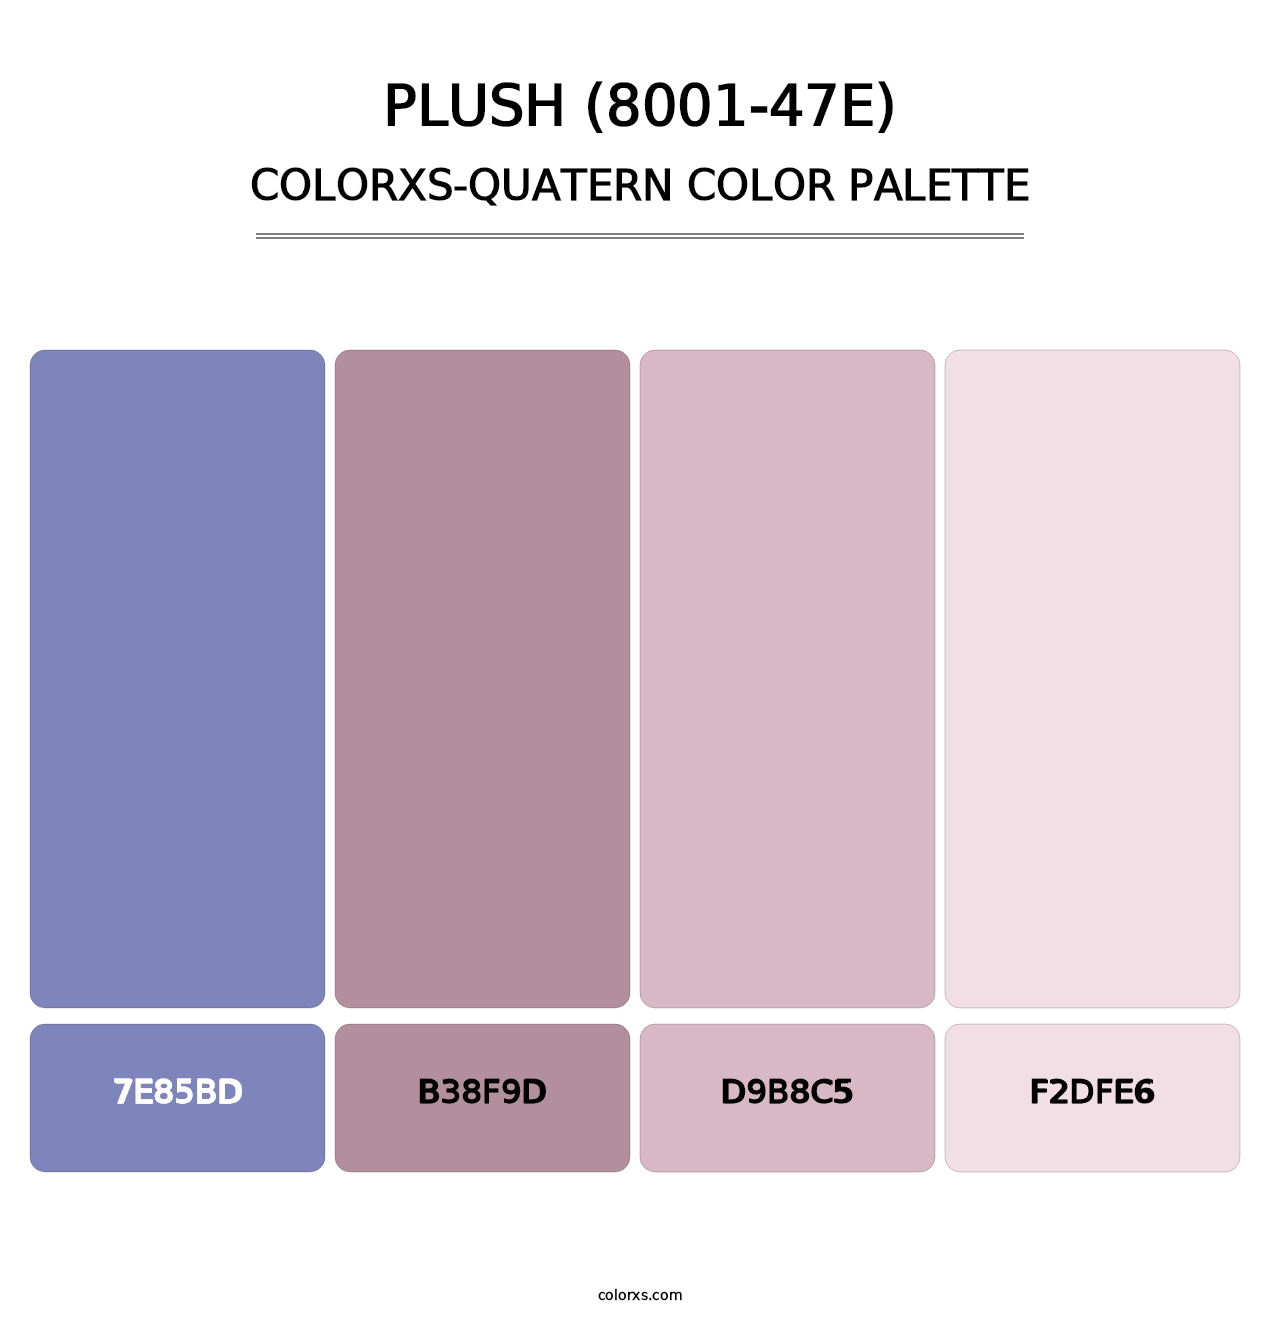 Plush (8001-47E) - Colorxs Quatern Palette